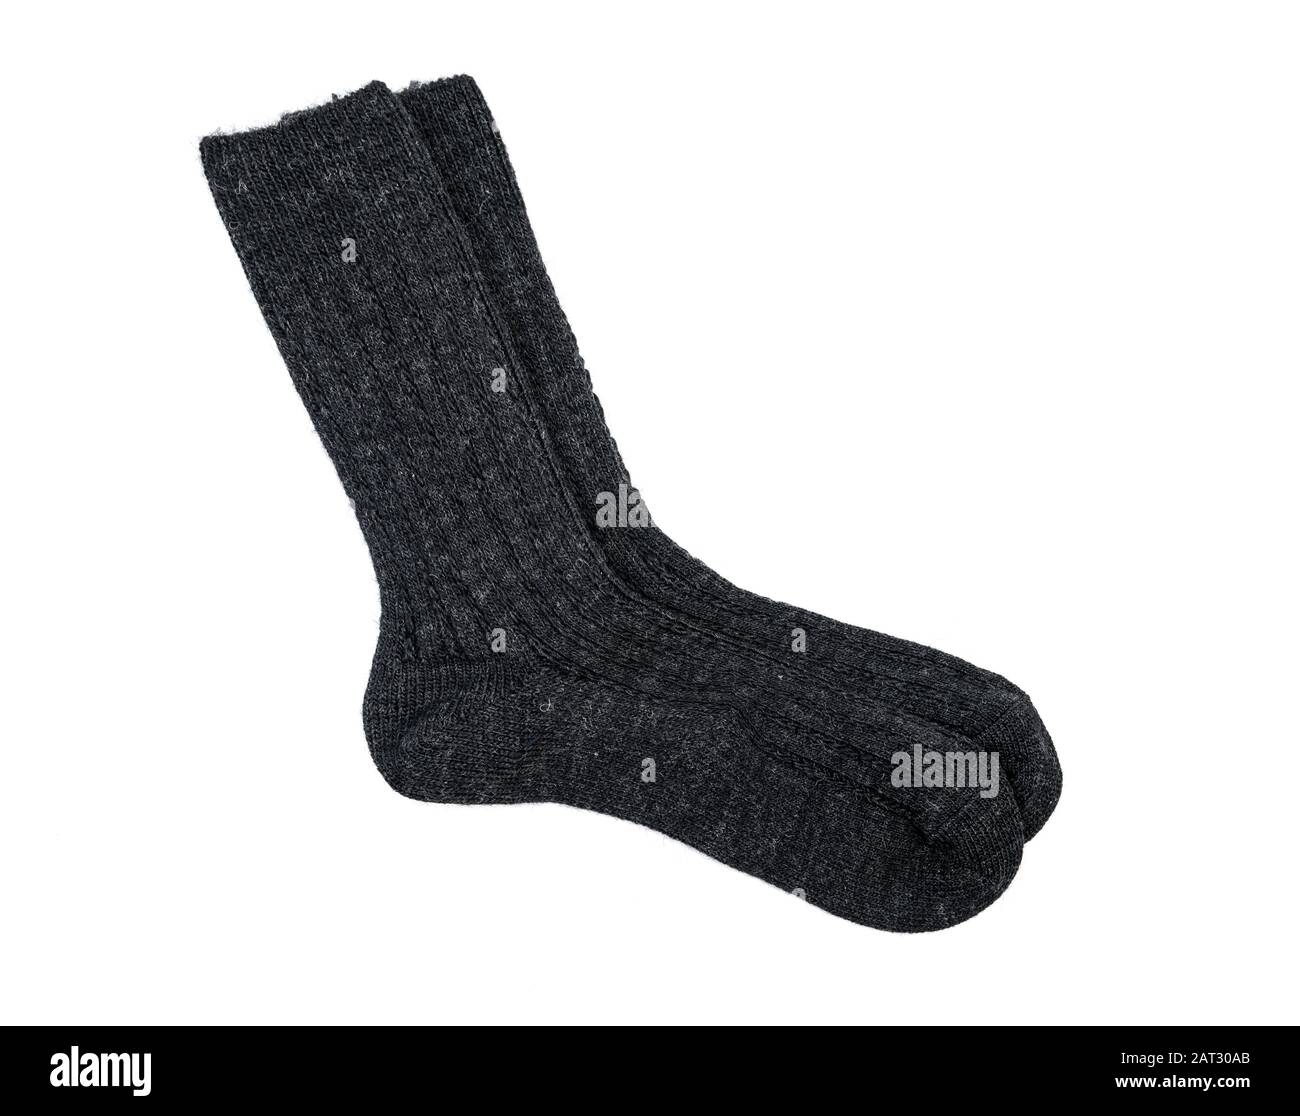 Par de calcetines de lana gris oscuro aislados sobre fondo blanco Foto de stock